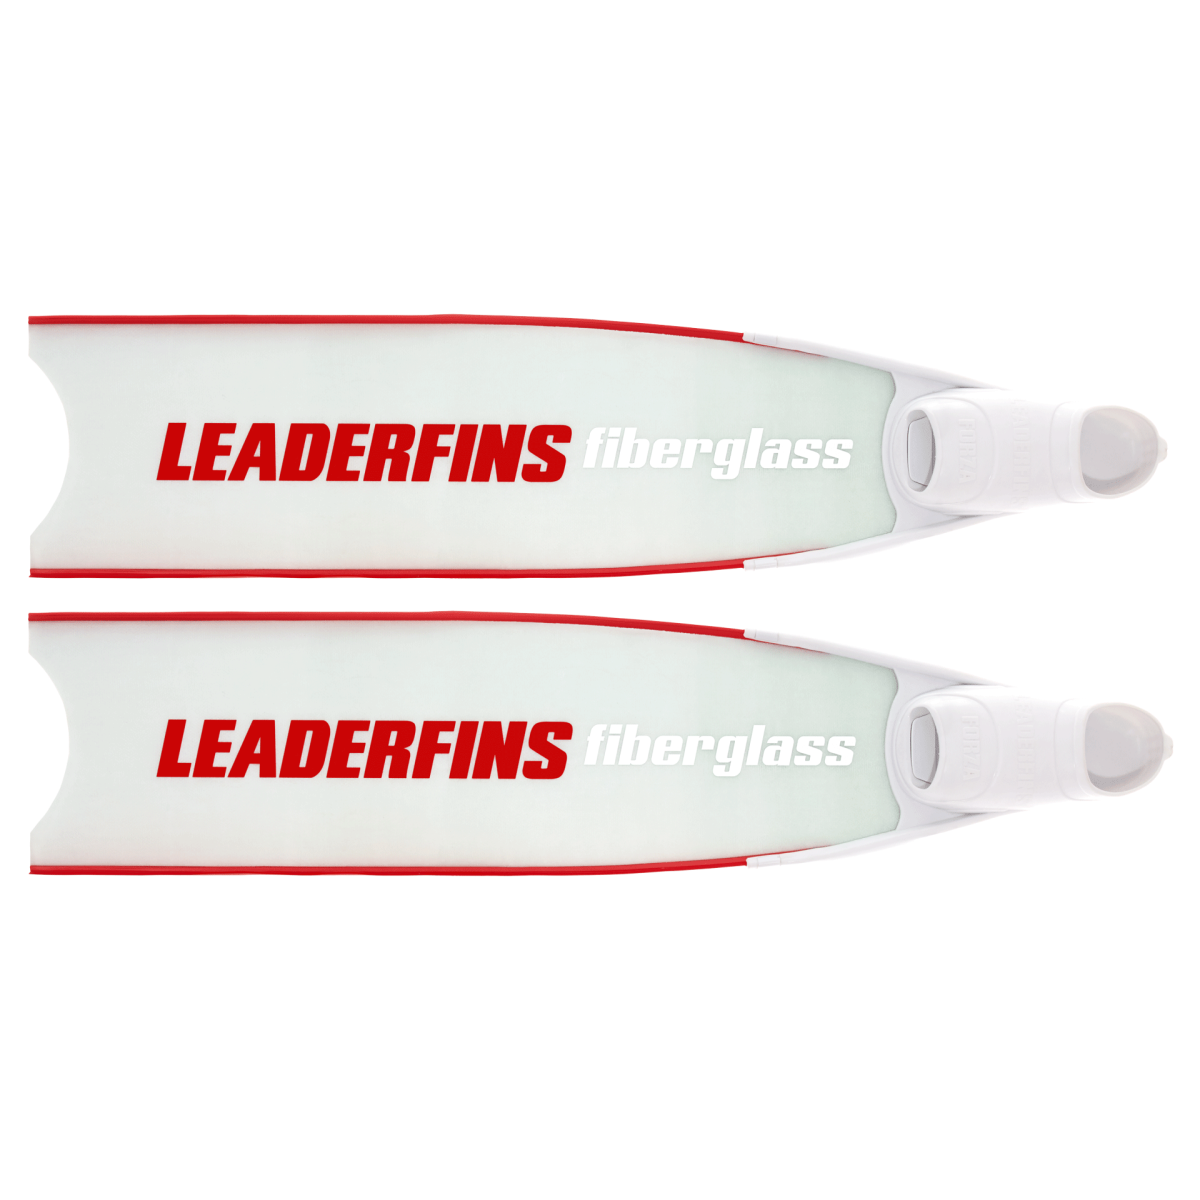 Leaderfins Fiberglass fins Product Image